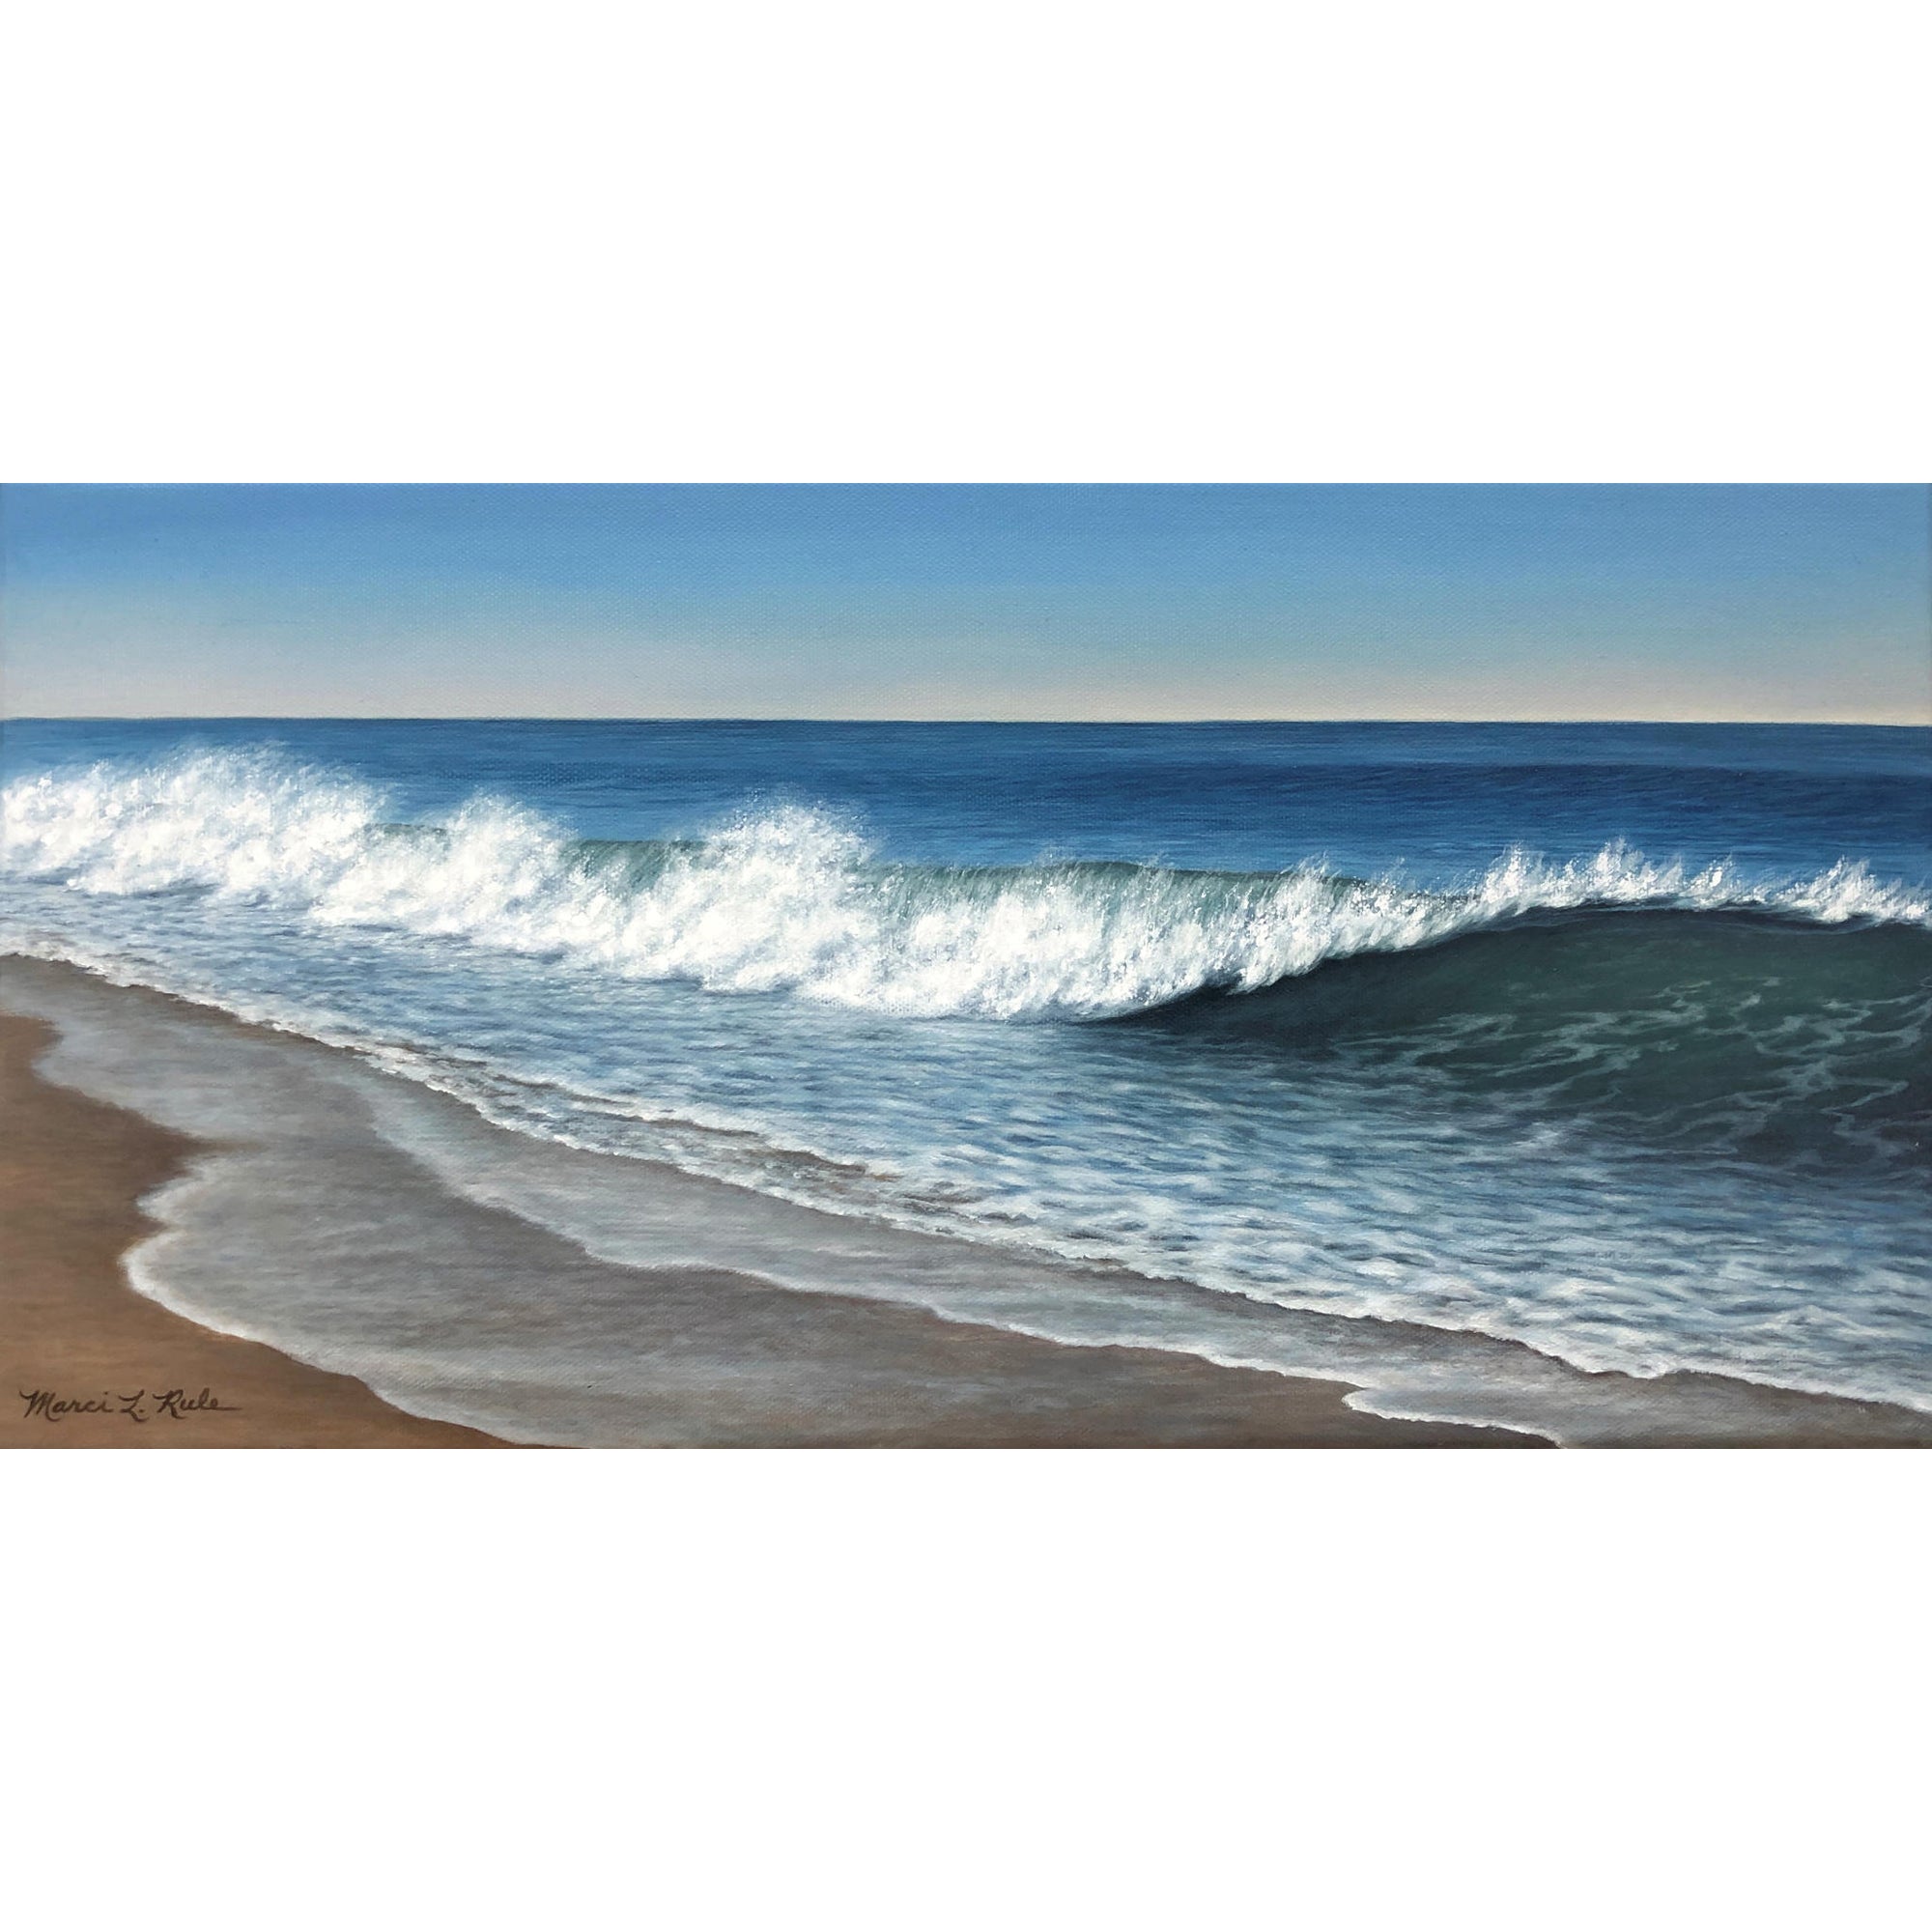 High Tide #2-Coastal Ocean Wave prints